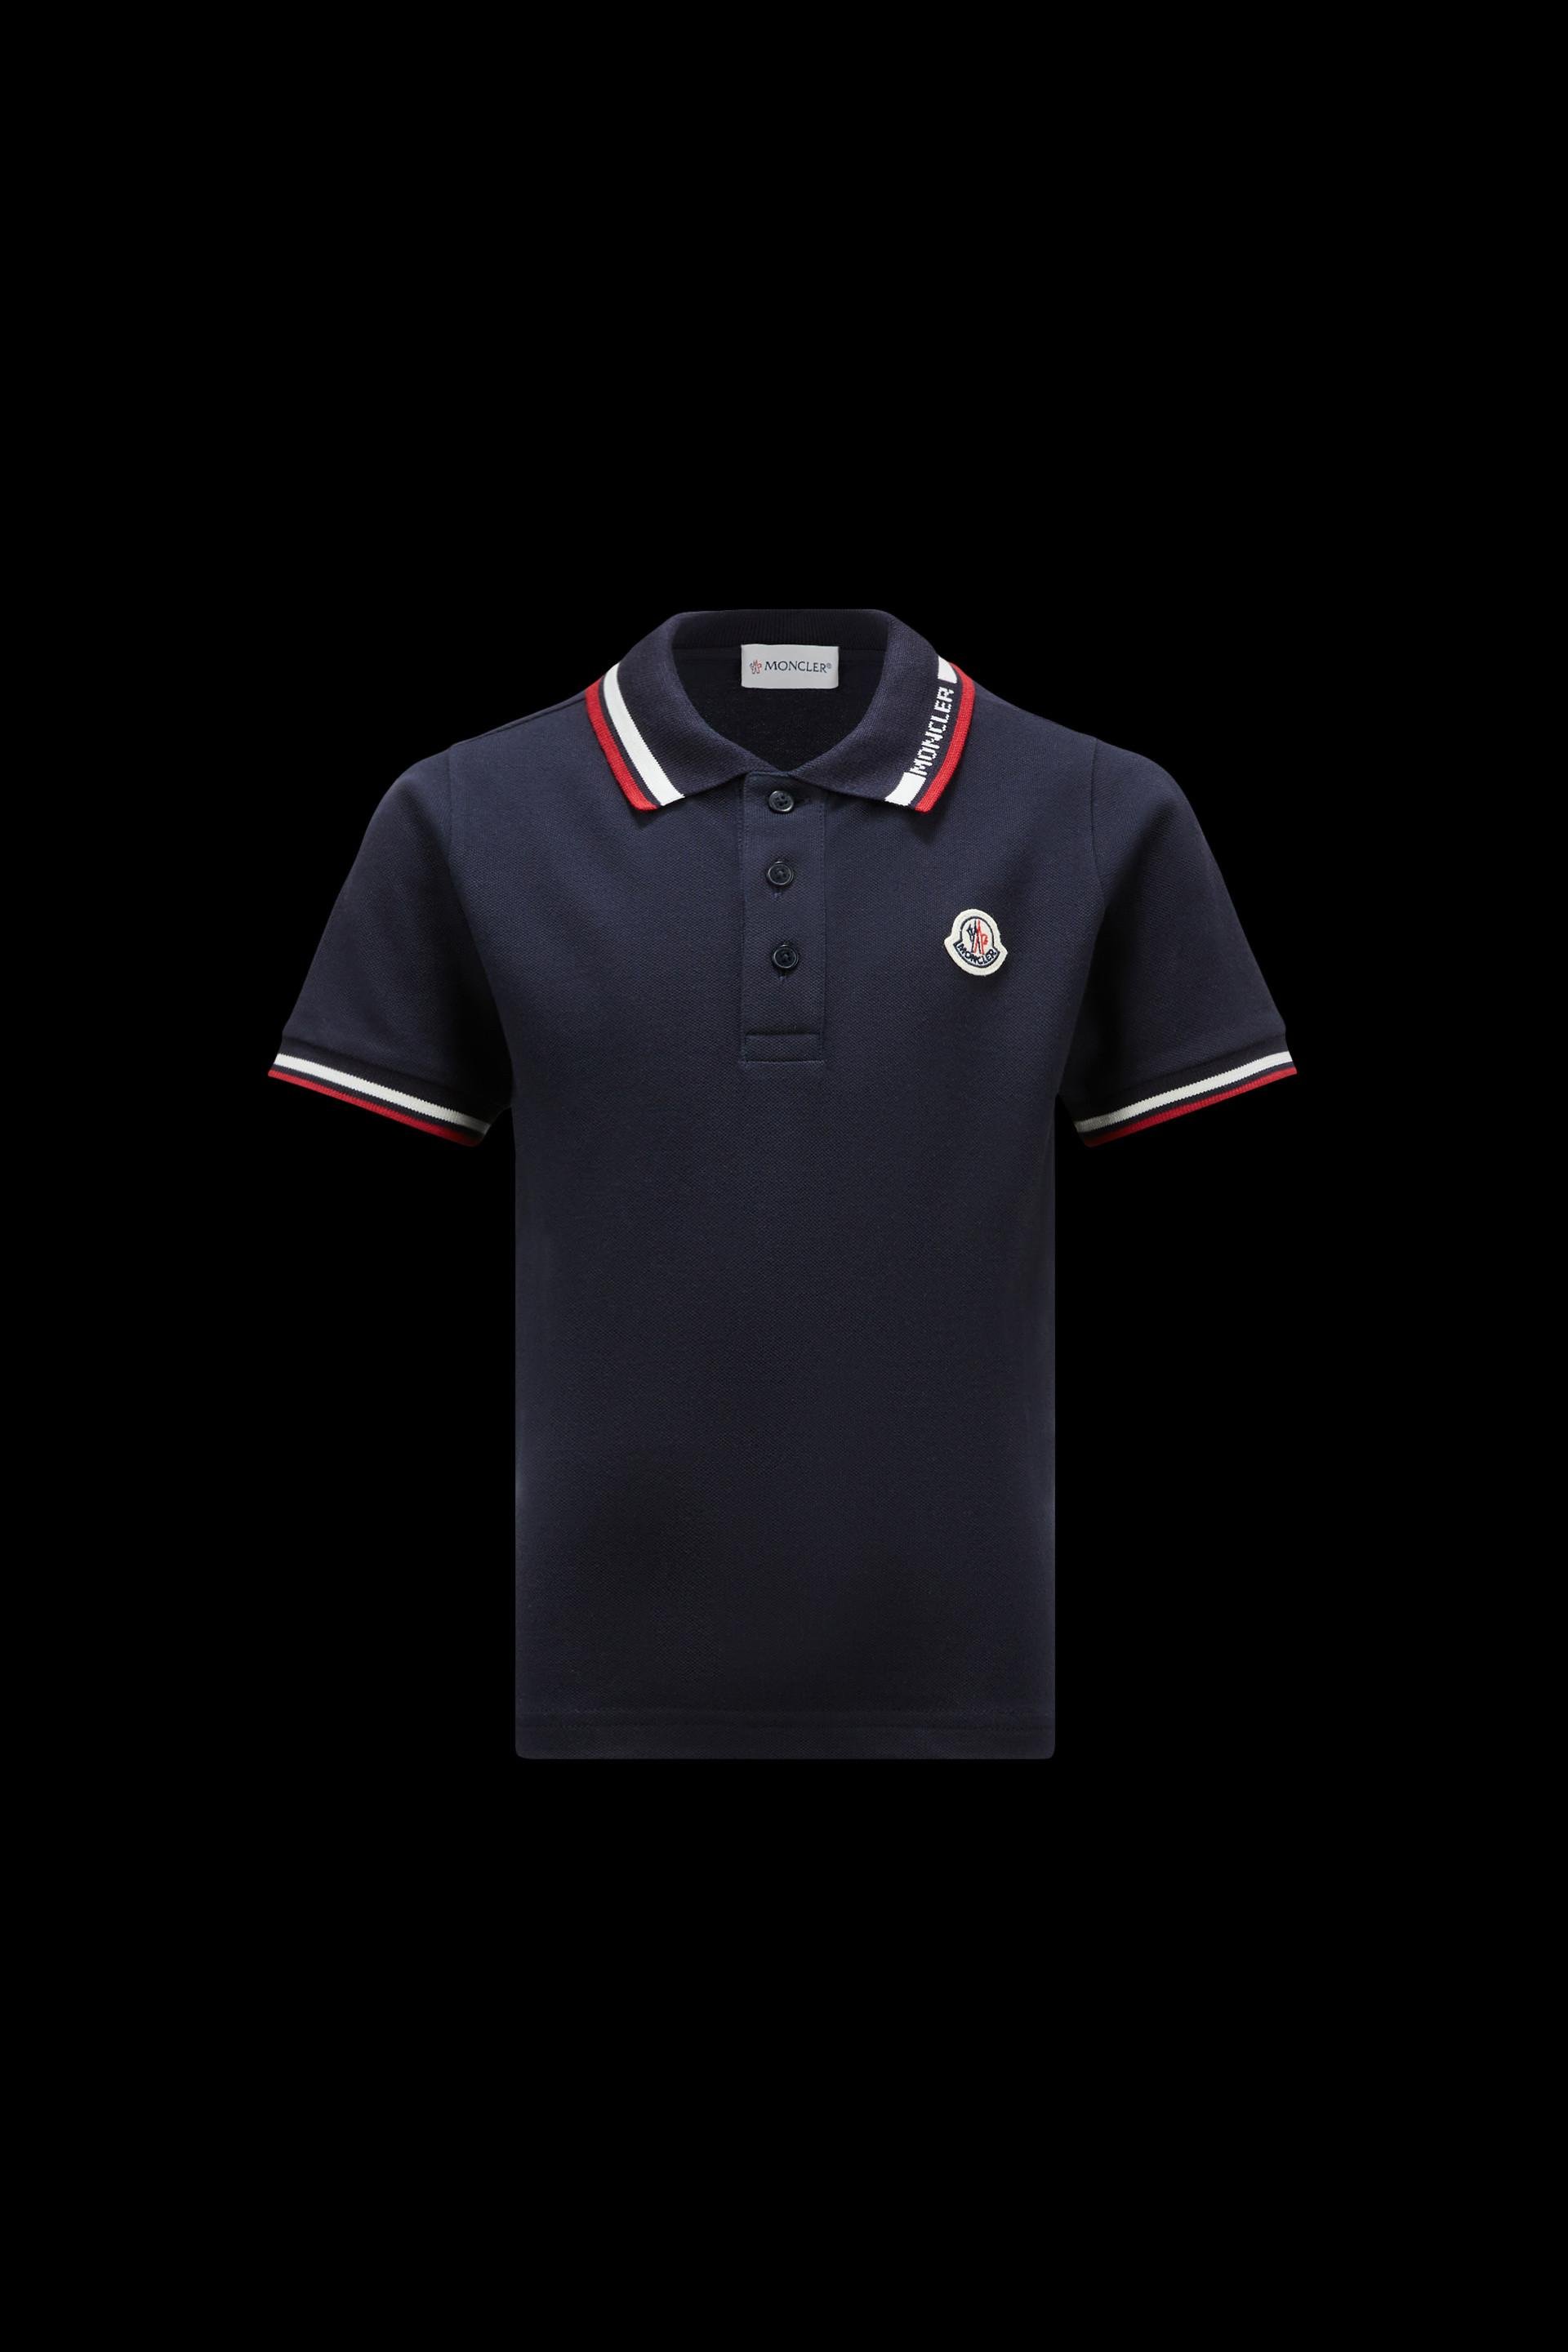 Tricolor Trim Polo Shirt by MONCLER